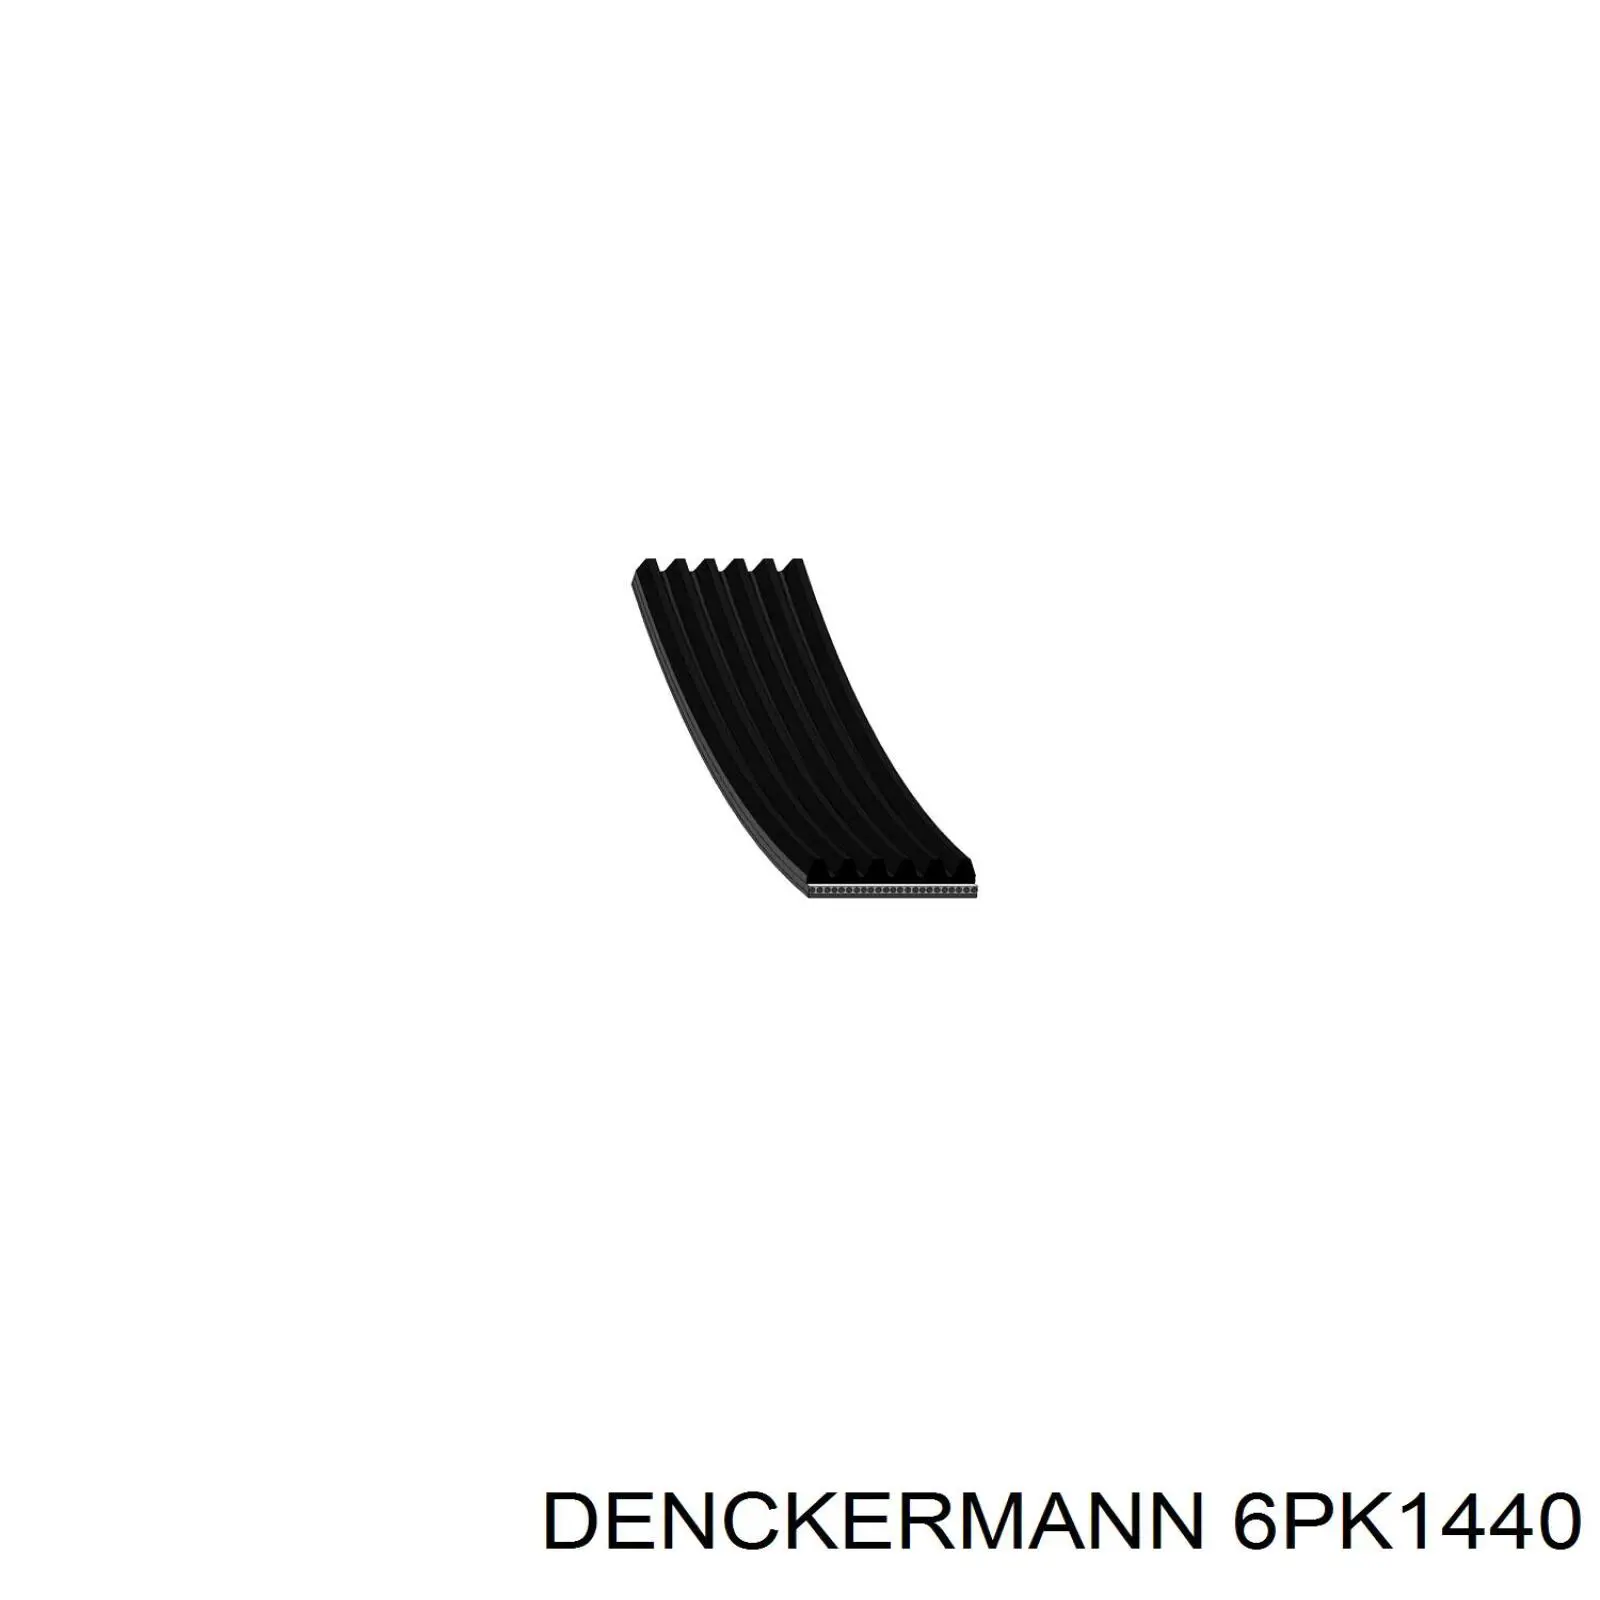 6PK1440 Denckermann correa trapezoidal